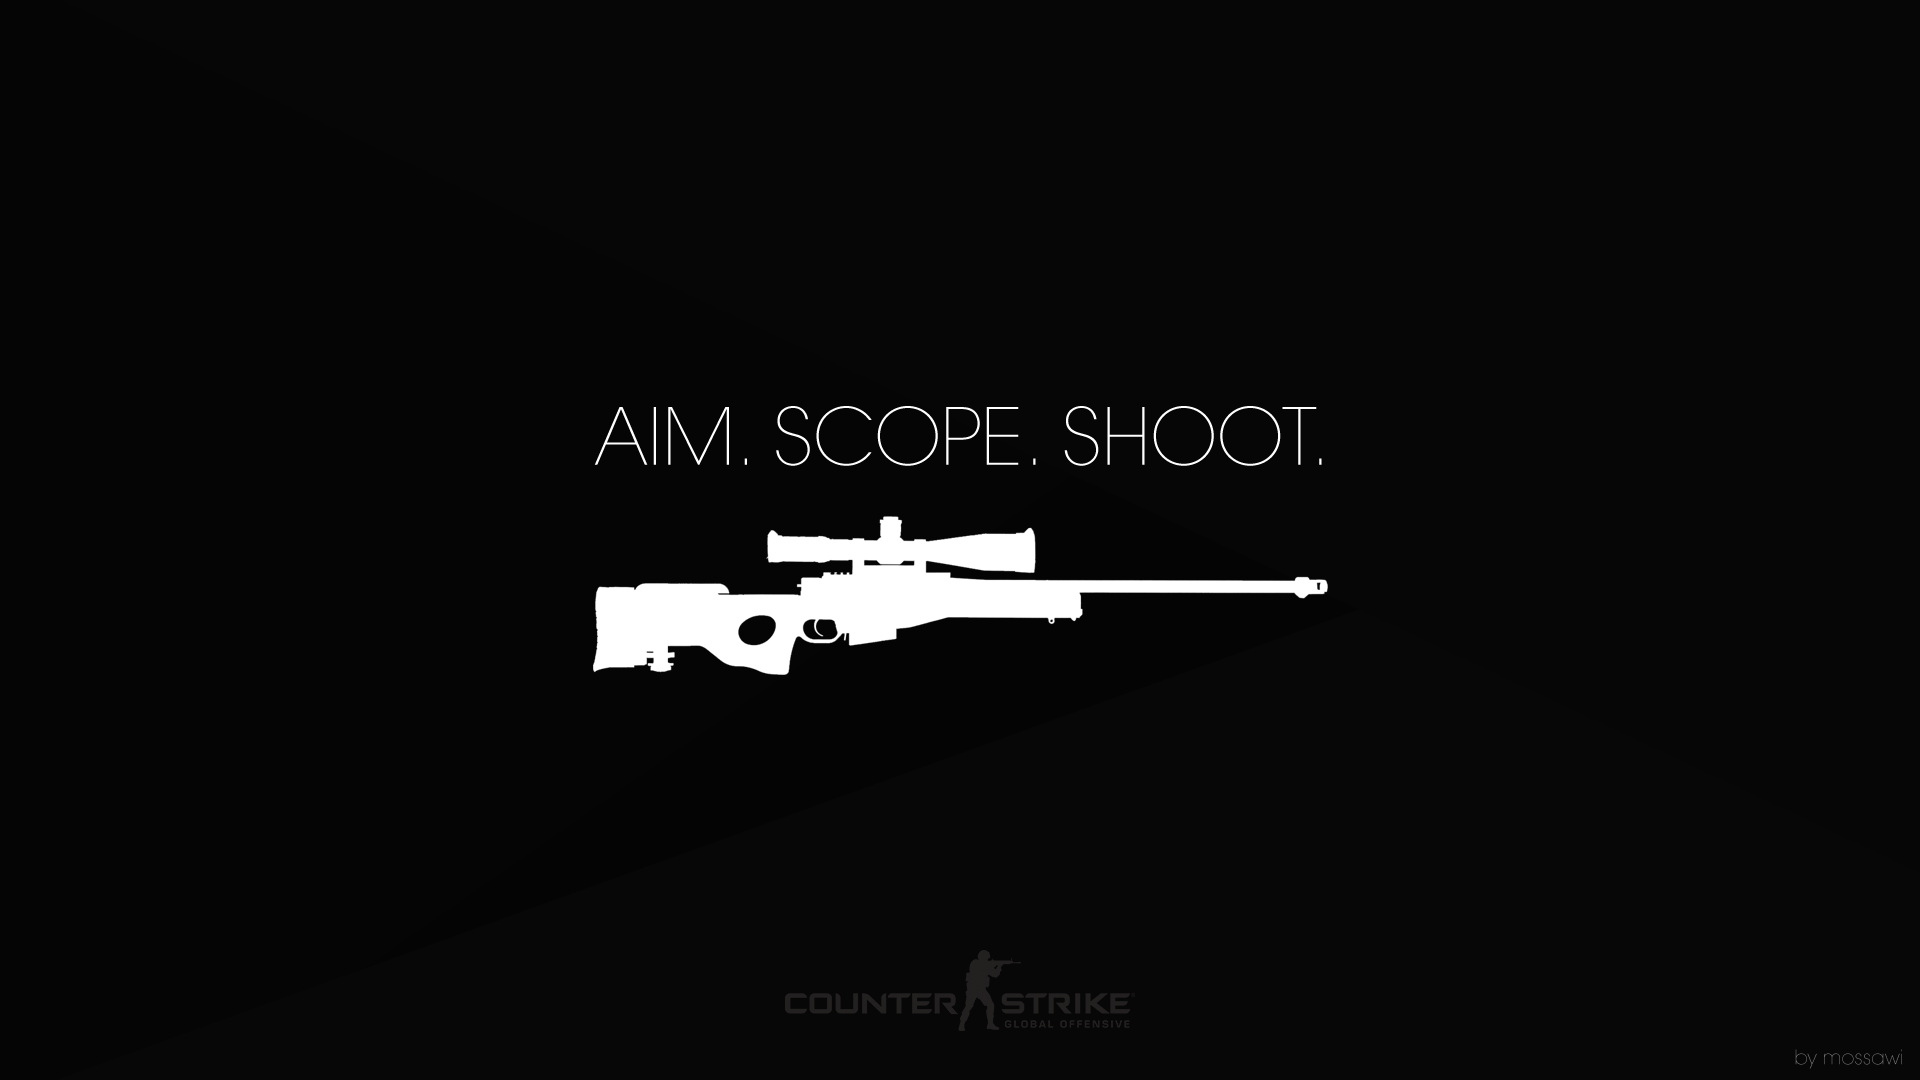 AIM. SCOPE. SHOOT. created